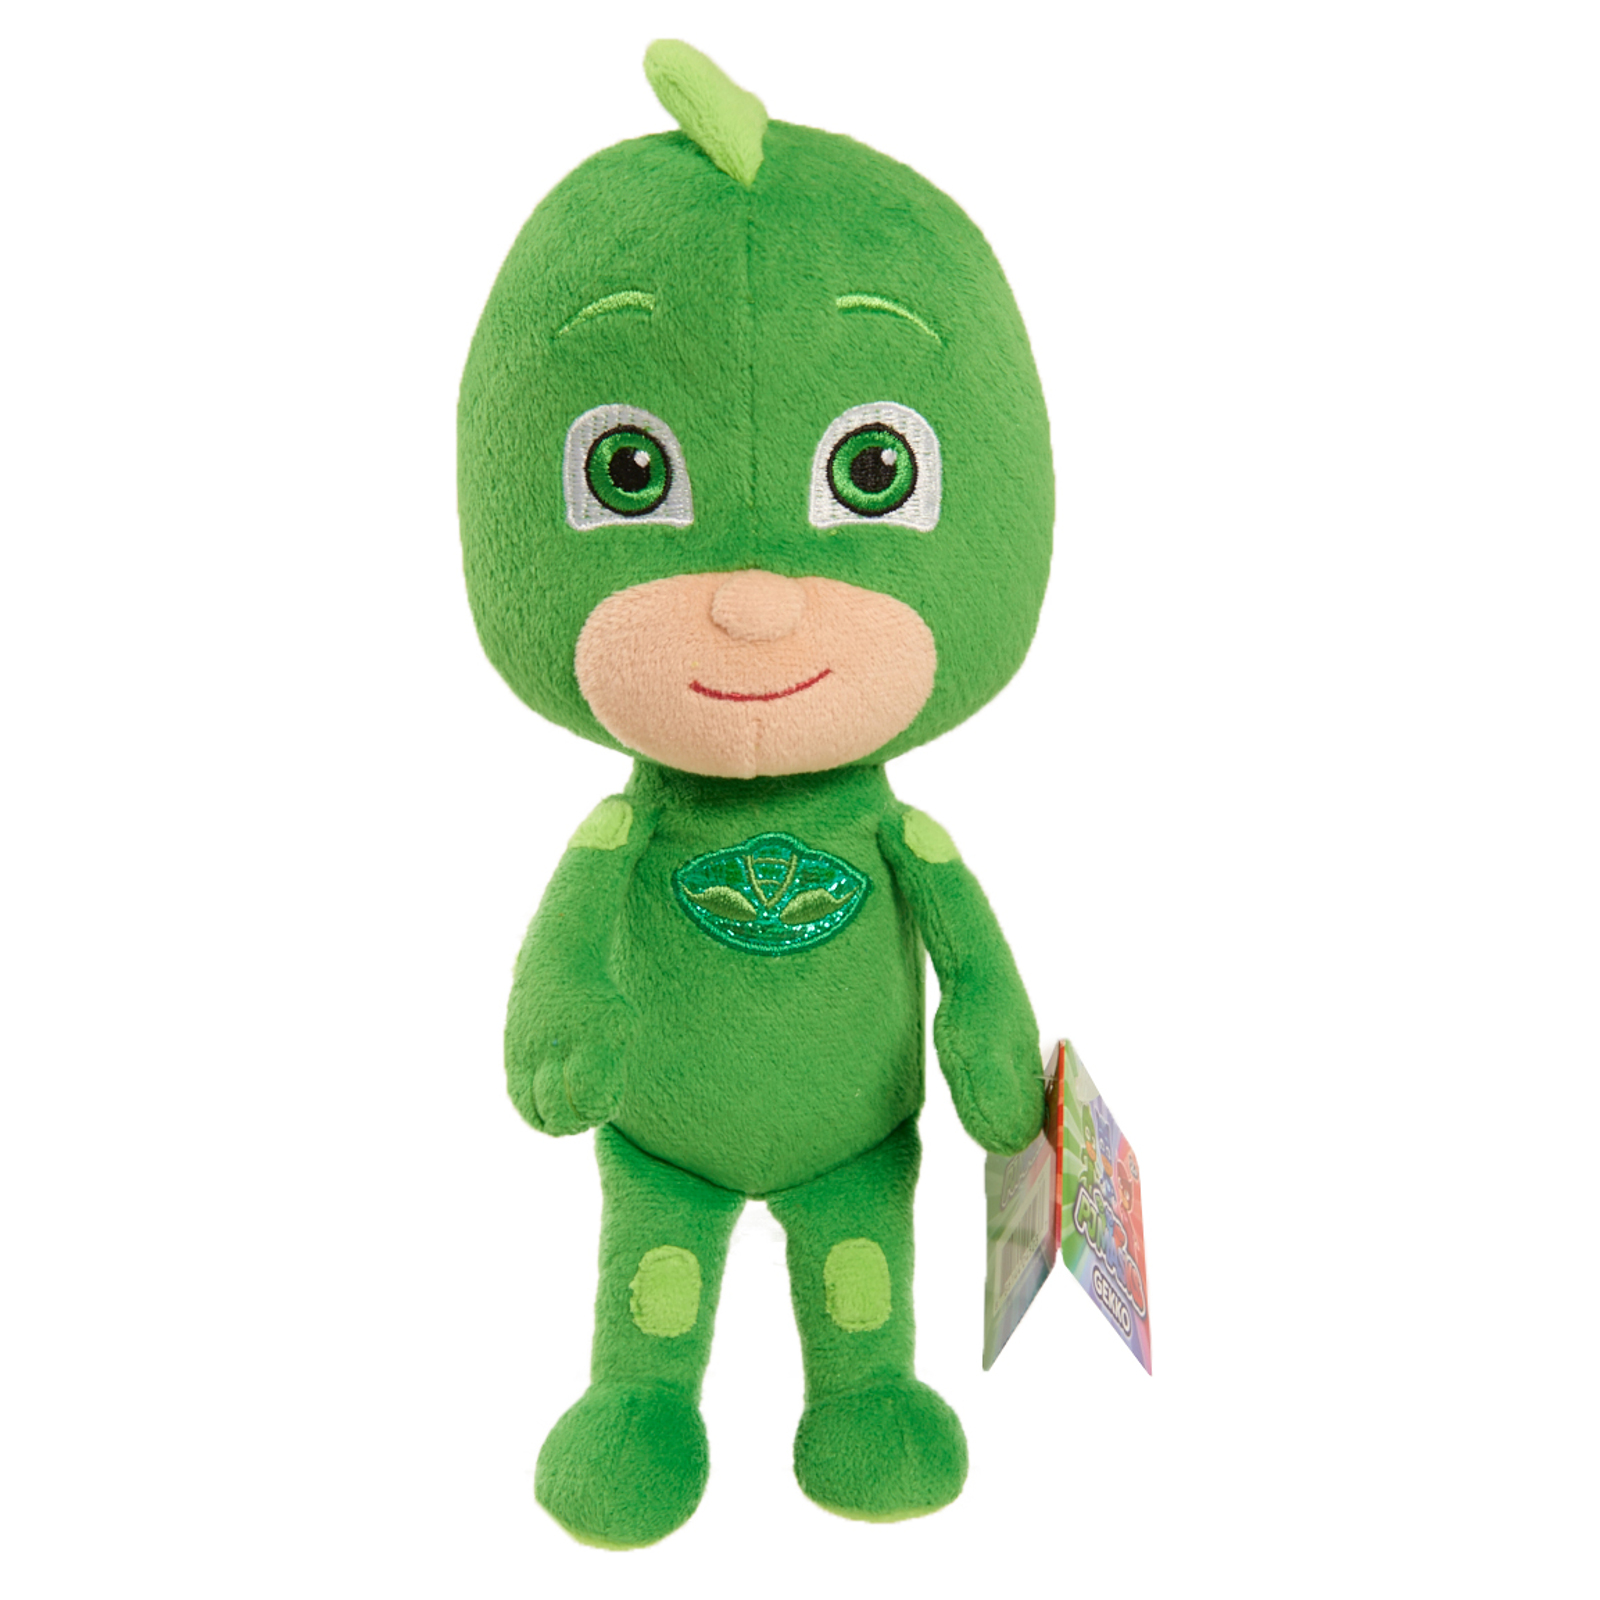 Pj Masks Bean Gekko Plush Toy Soft & Cuddly Kids TV Character 8 Inch Stuffed Toy